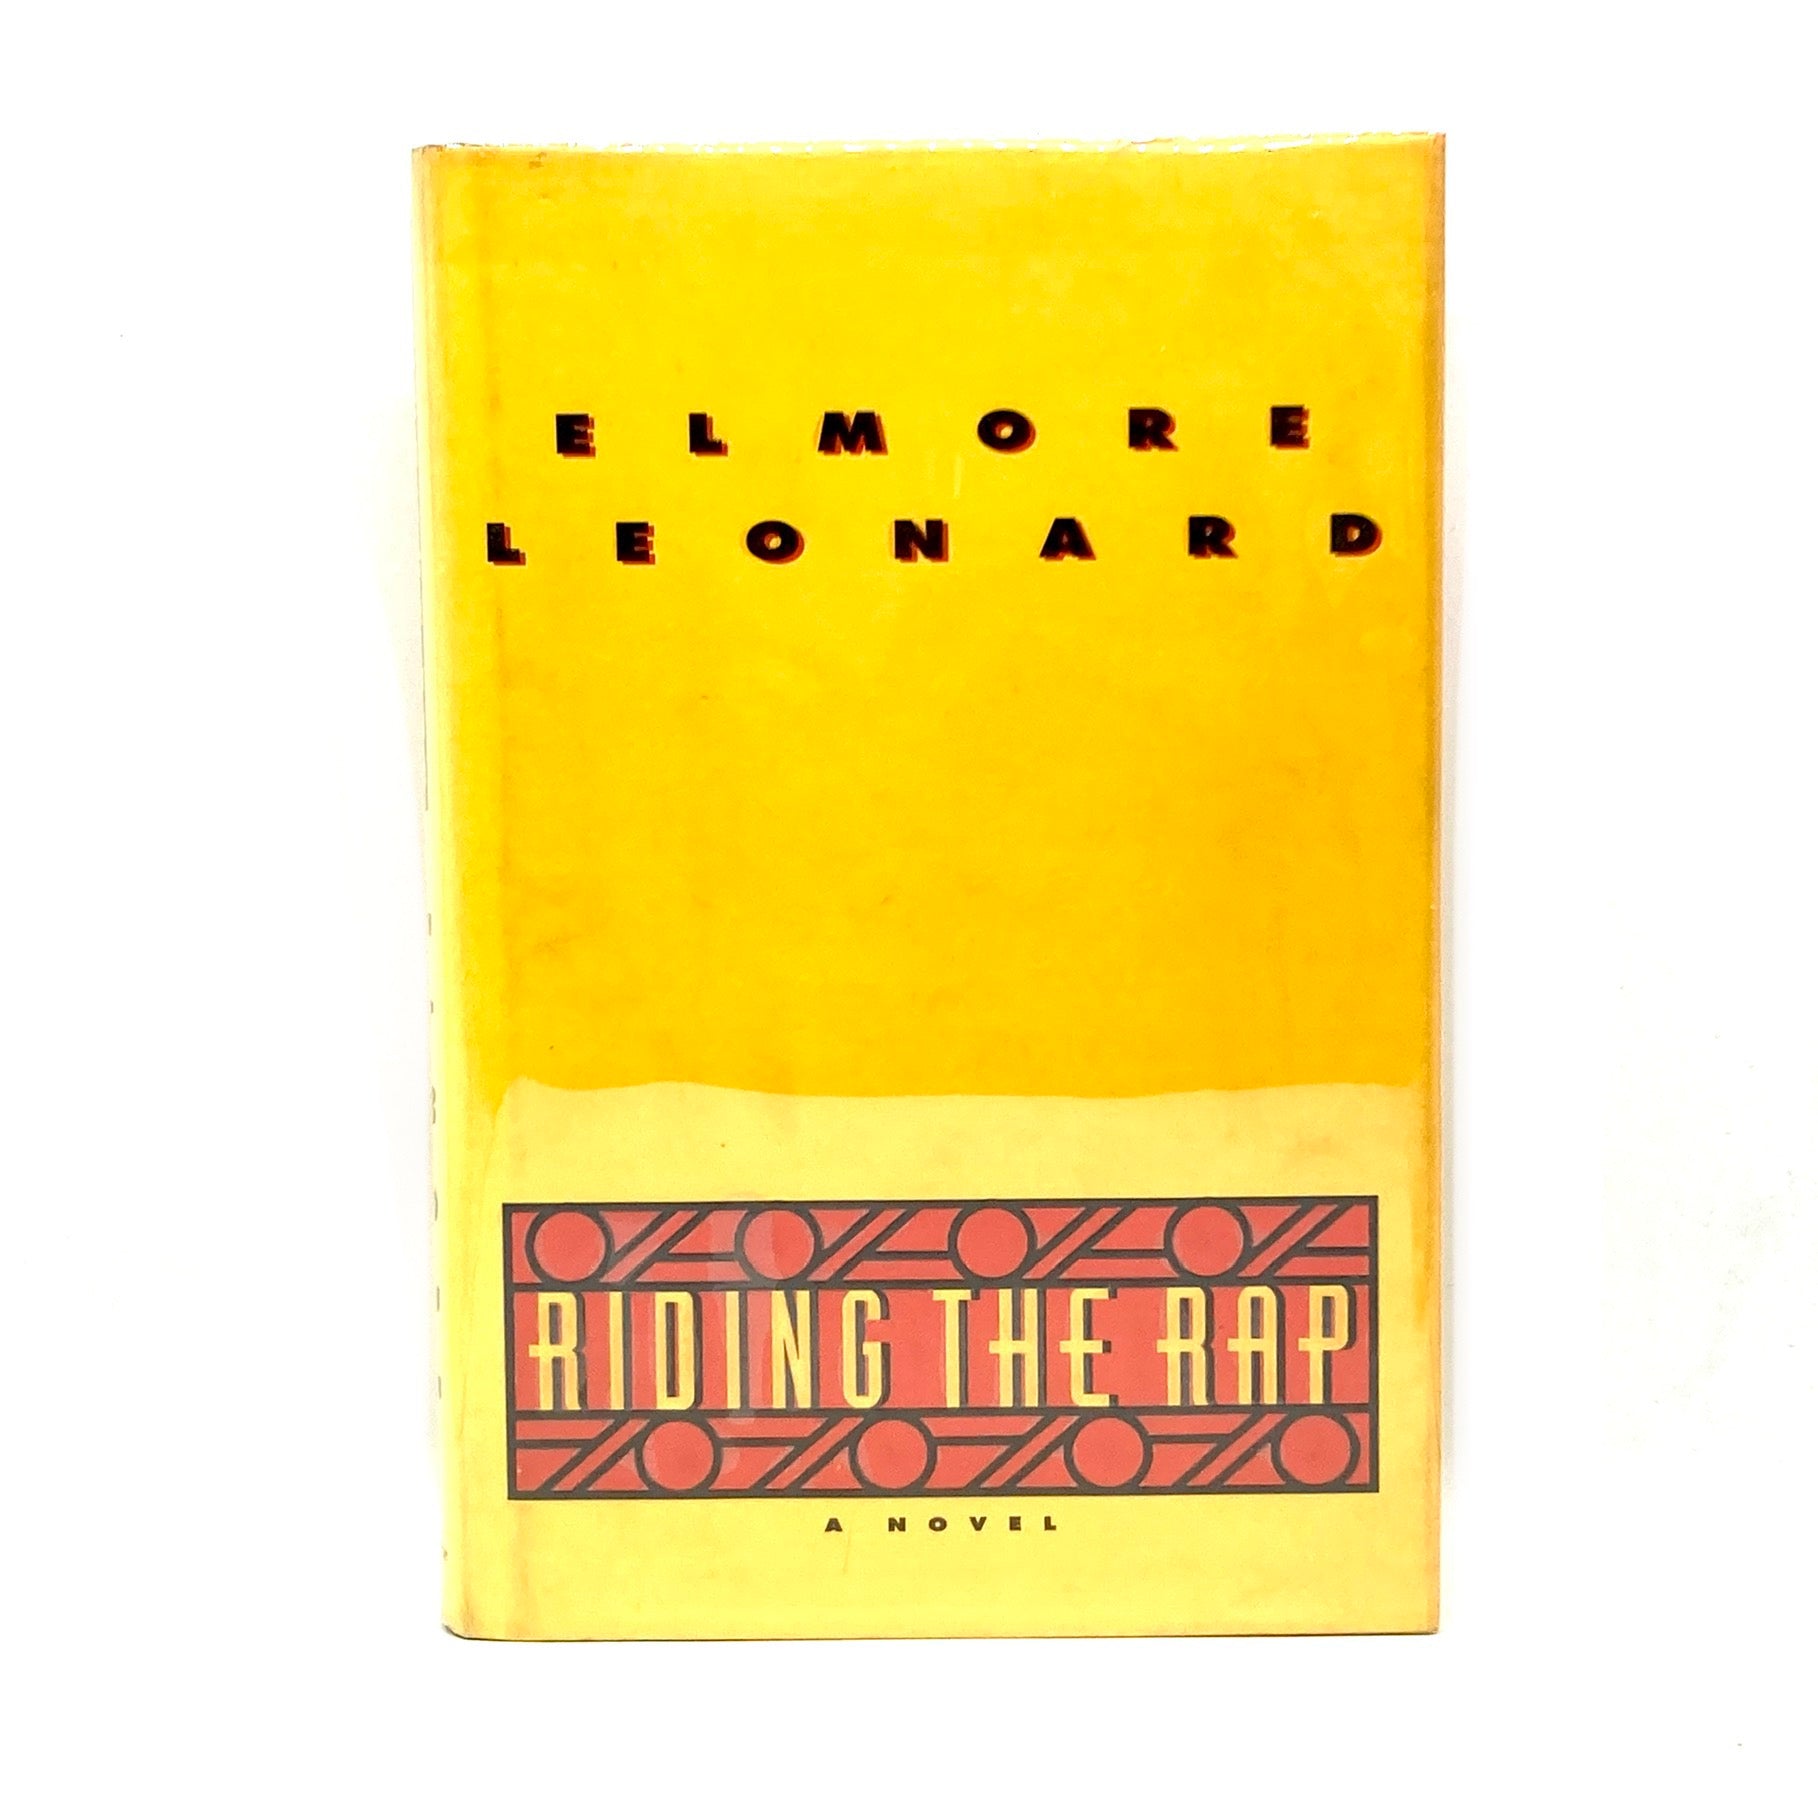 LEONARD, Elmore "Riding the Rap" [Delacorte, 1995] 1st Edition/1st (Signed) - Buzz Bookstore